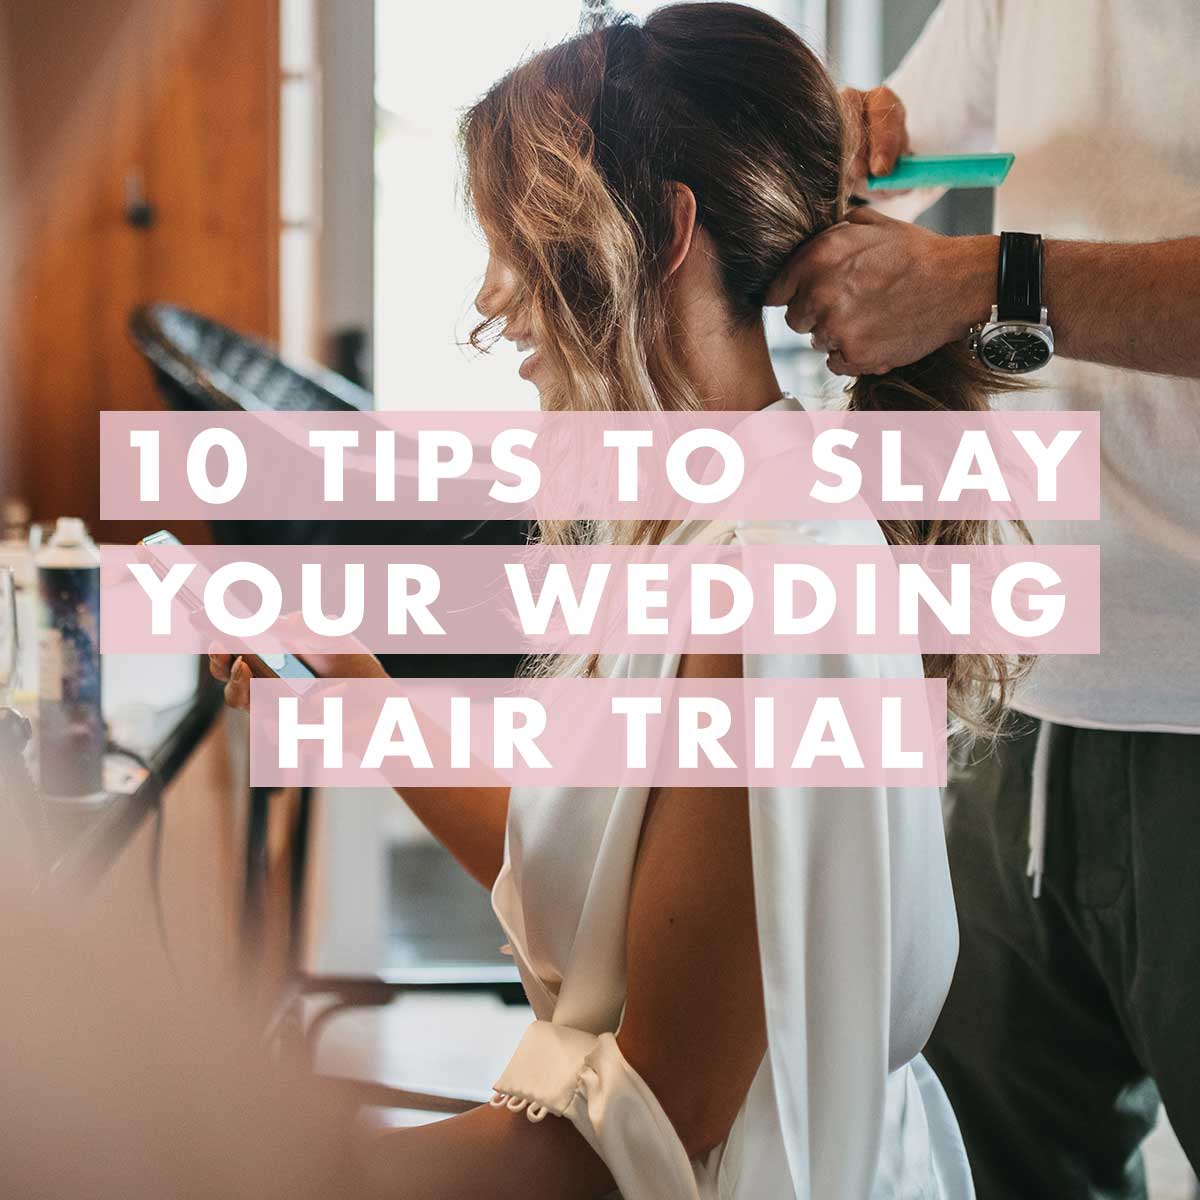 Wedding hair trial